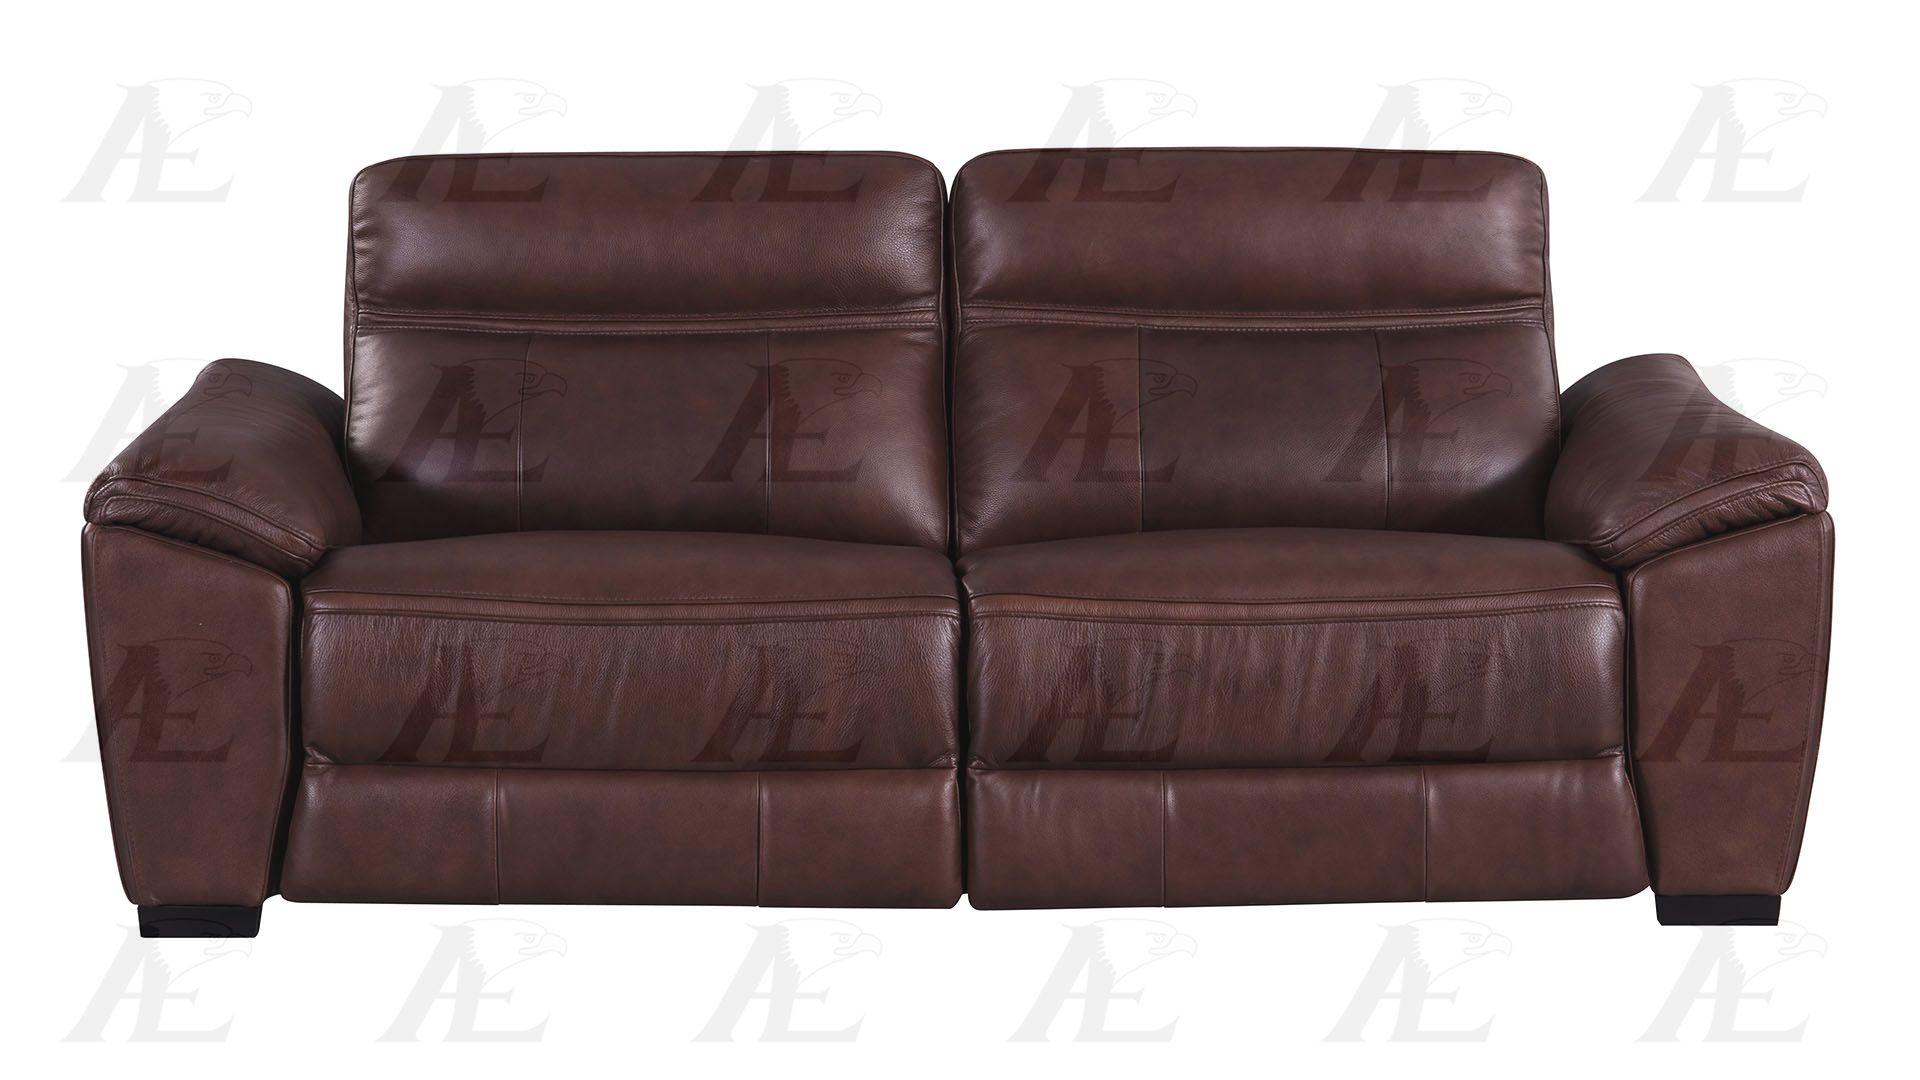 

    
EK088-BR Set-2 Brown Italian Full Leather Recliner Sofa Set 2Pcs EK088-BR American Eagle Modern
